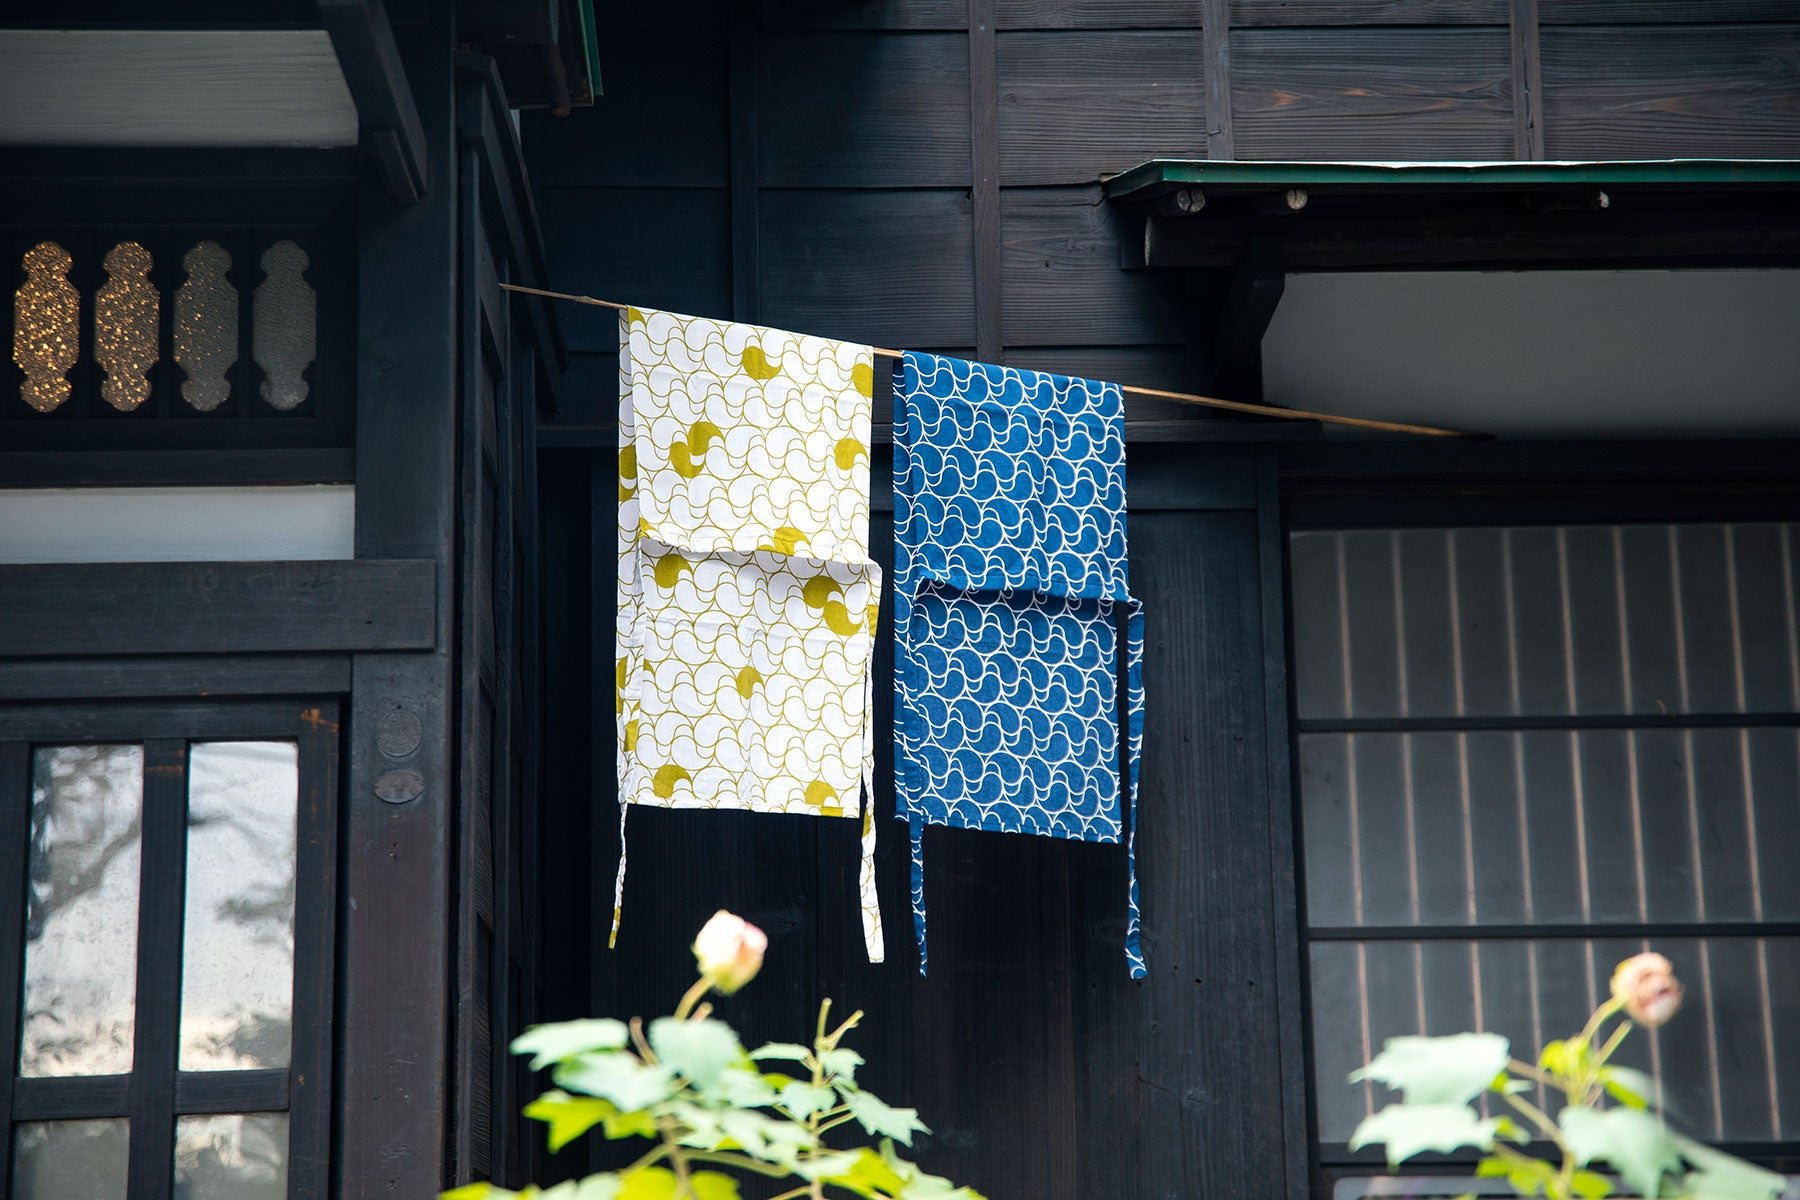 Fundoshi - Japan's Traditional And Modern Fashionable Underwear